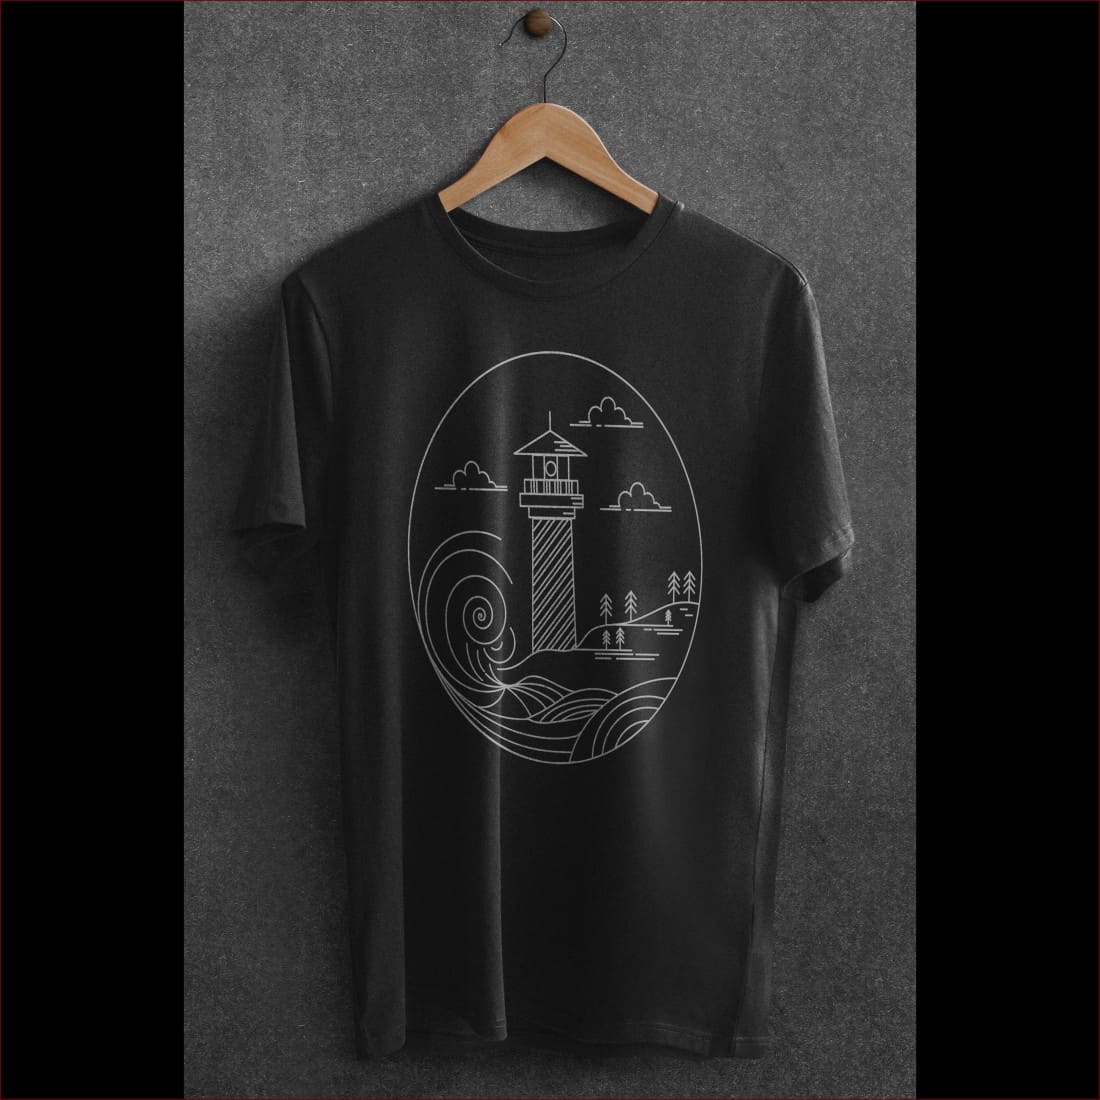 Lighthouse Line Art Style T-shirt Design main image.